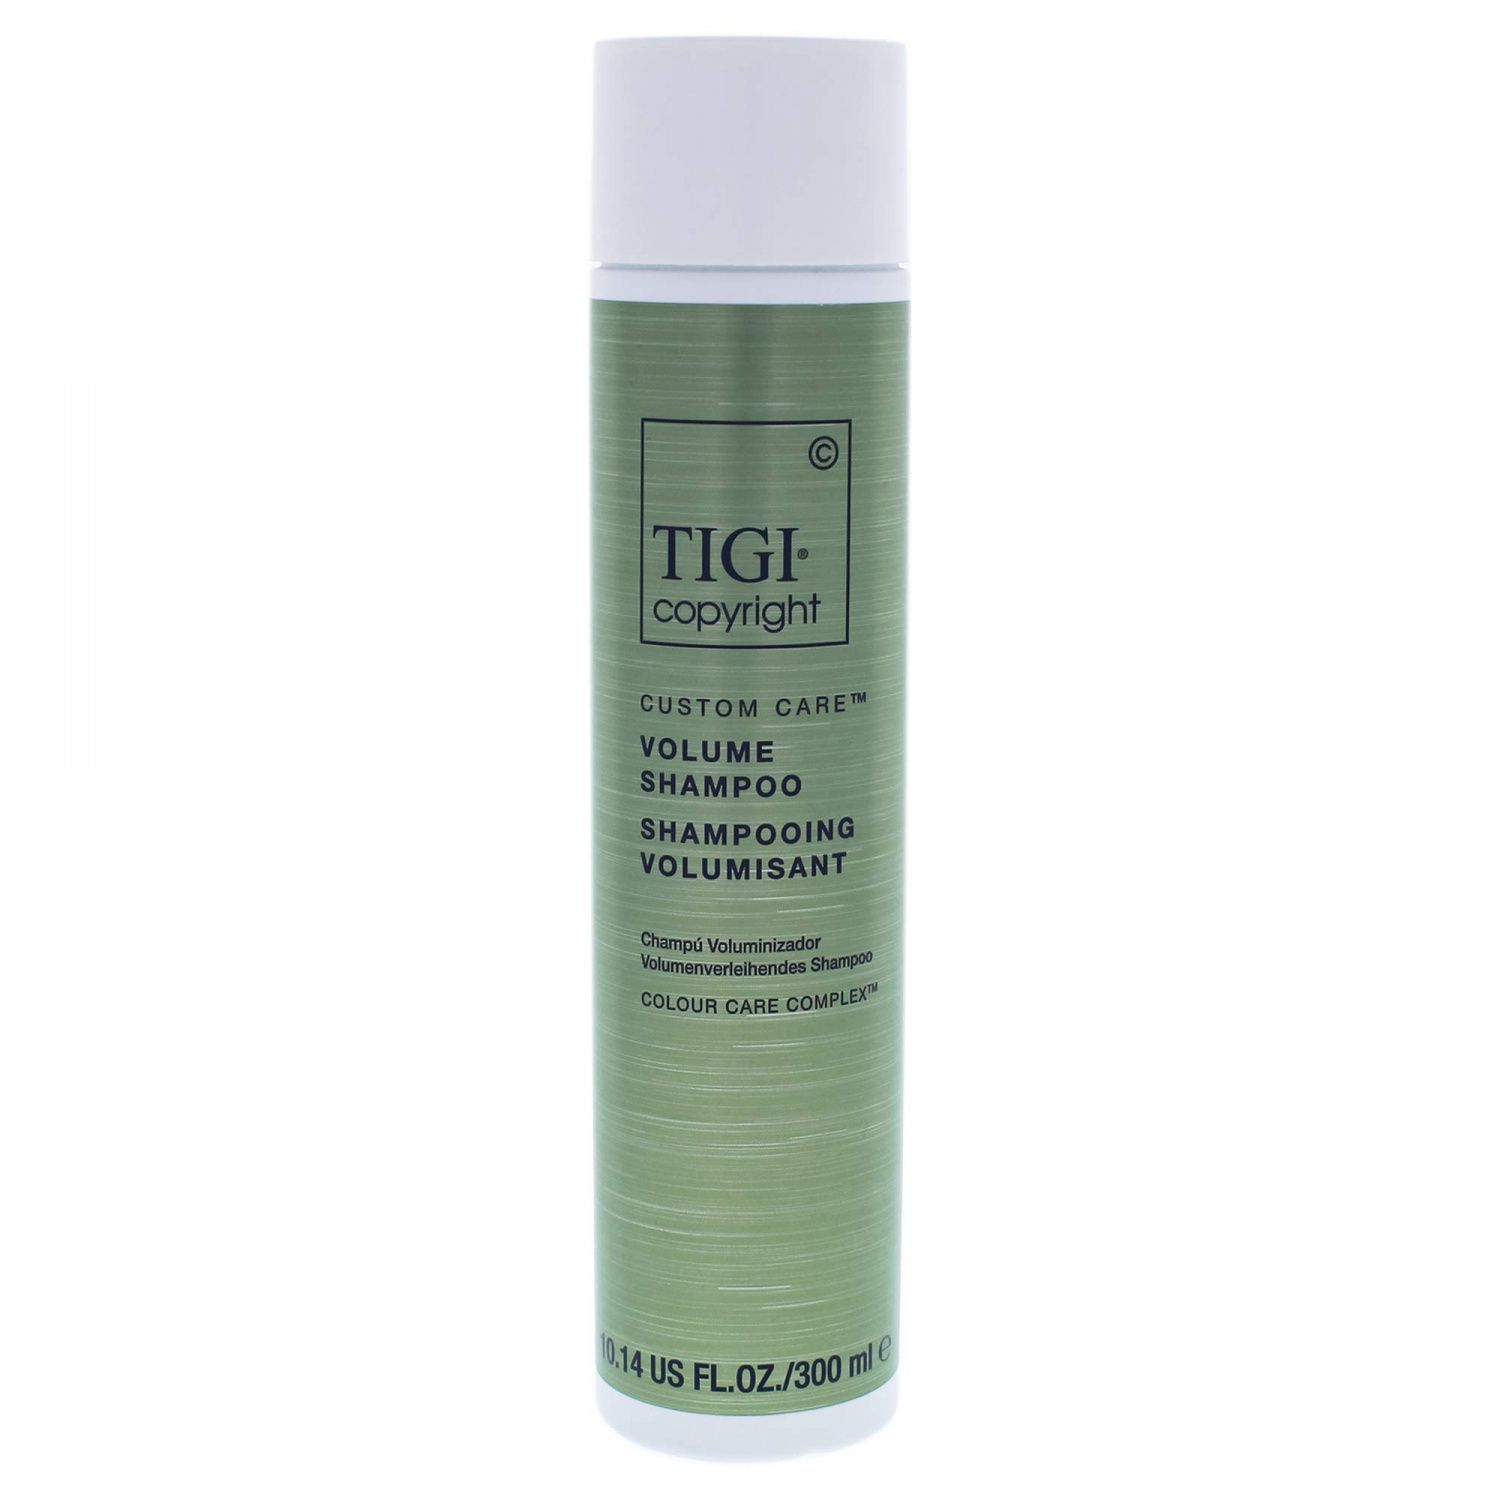 Шампунь для объема - TIGI Copyright Custom Care Volume Shampoo 300 ml